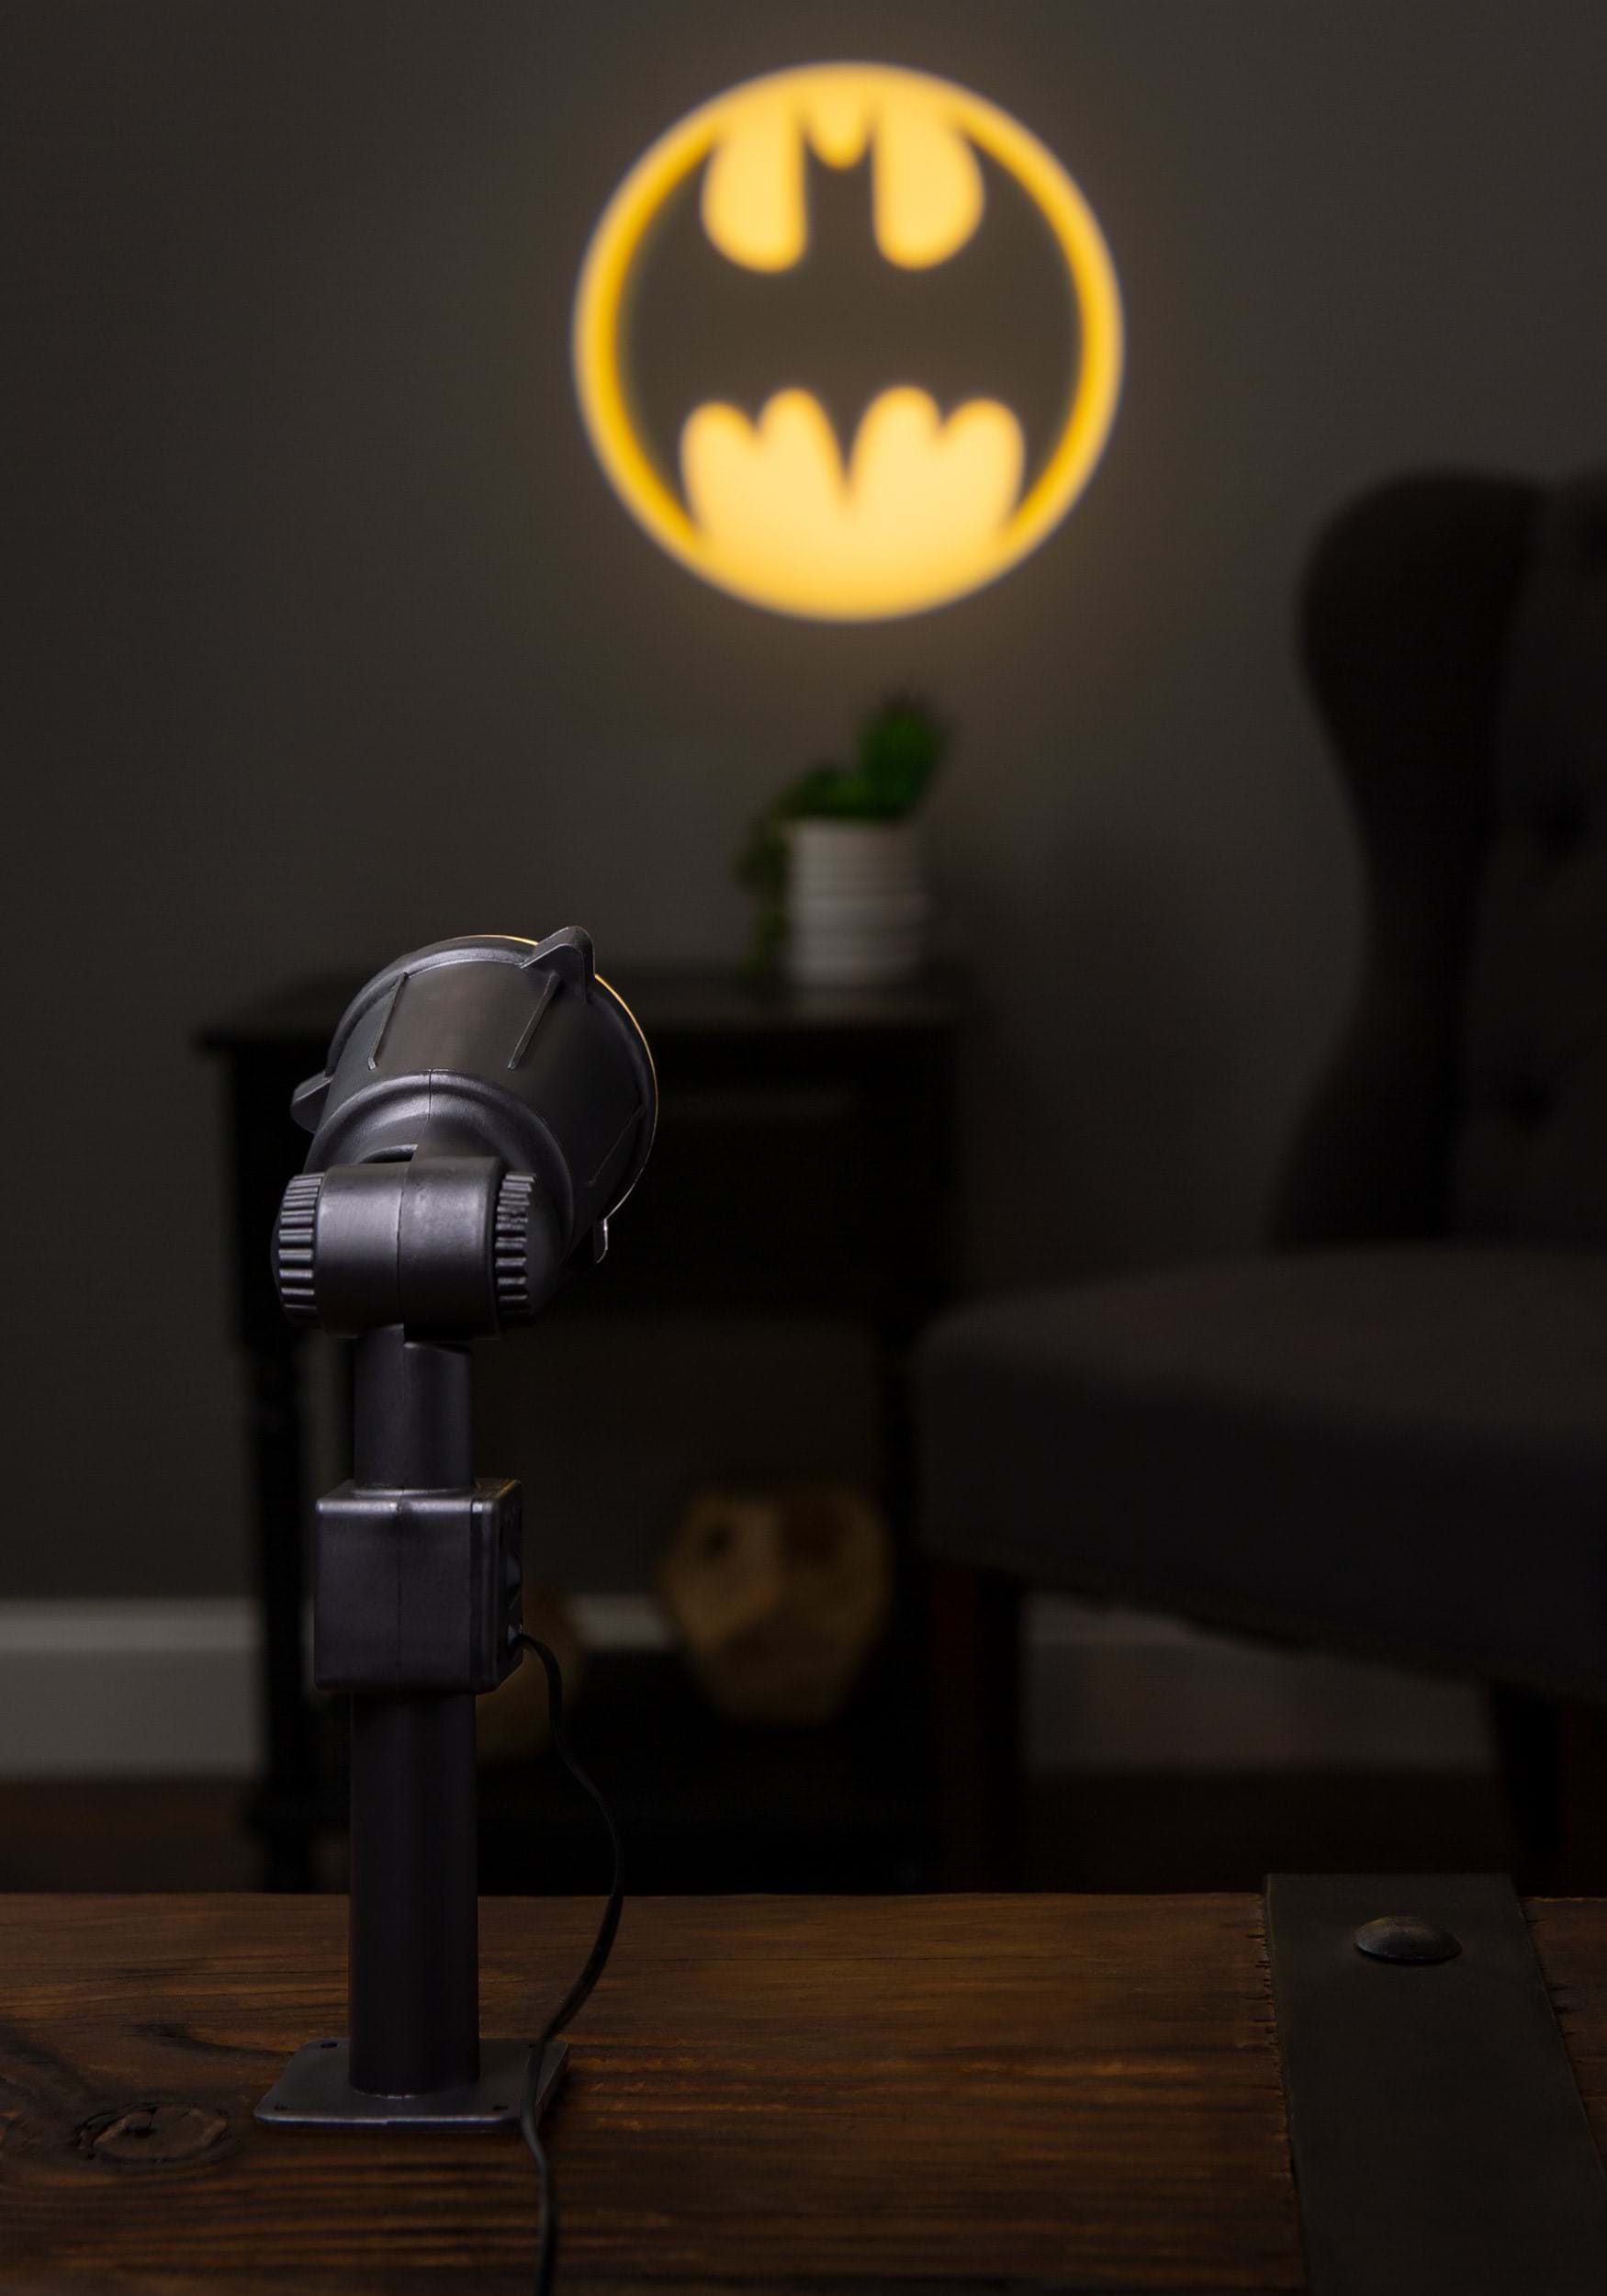 Batman Bat Signal Sign Logo Projection Light Lamp 4.6x4.1 Gold Idea Nuova  New